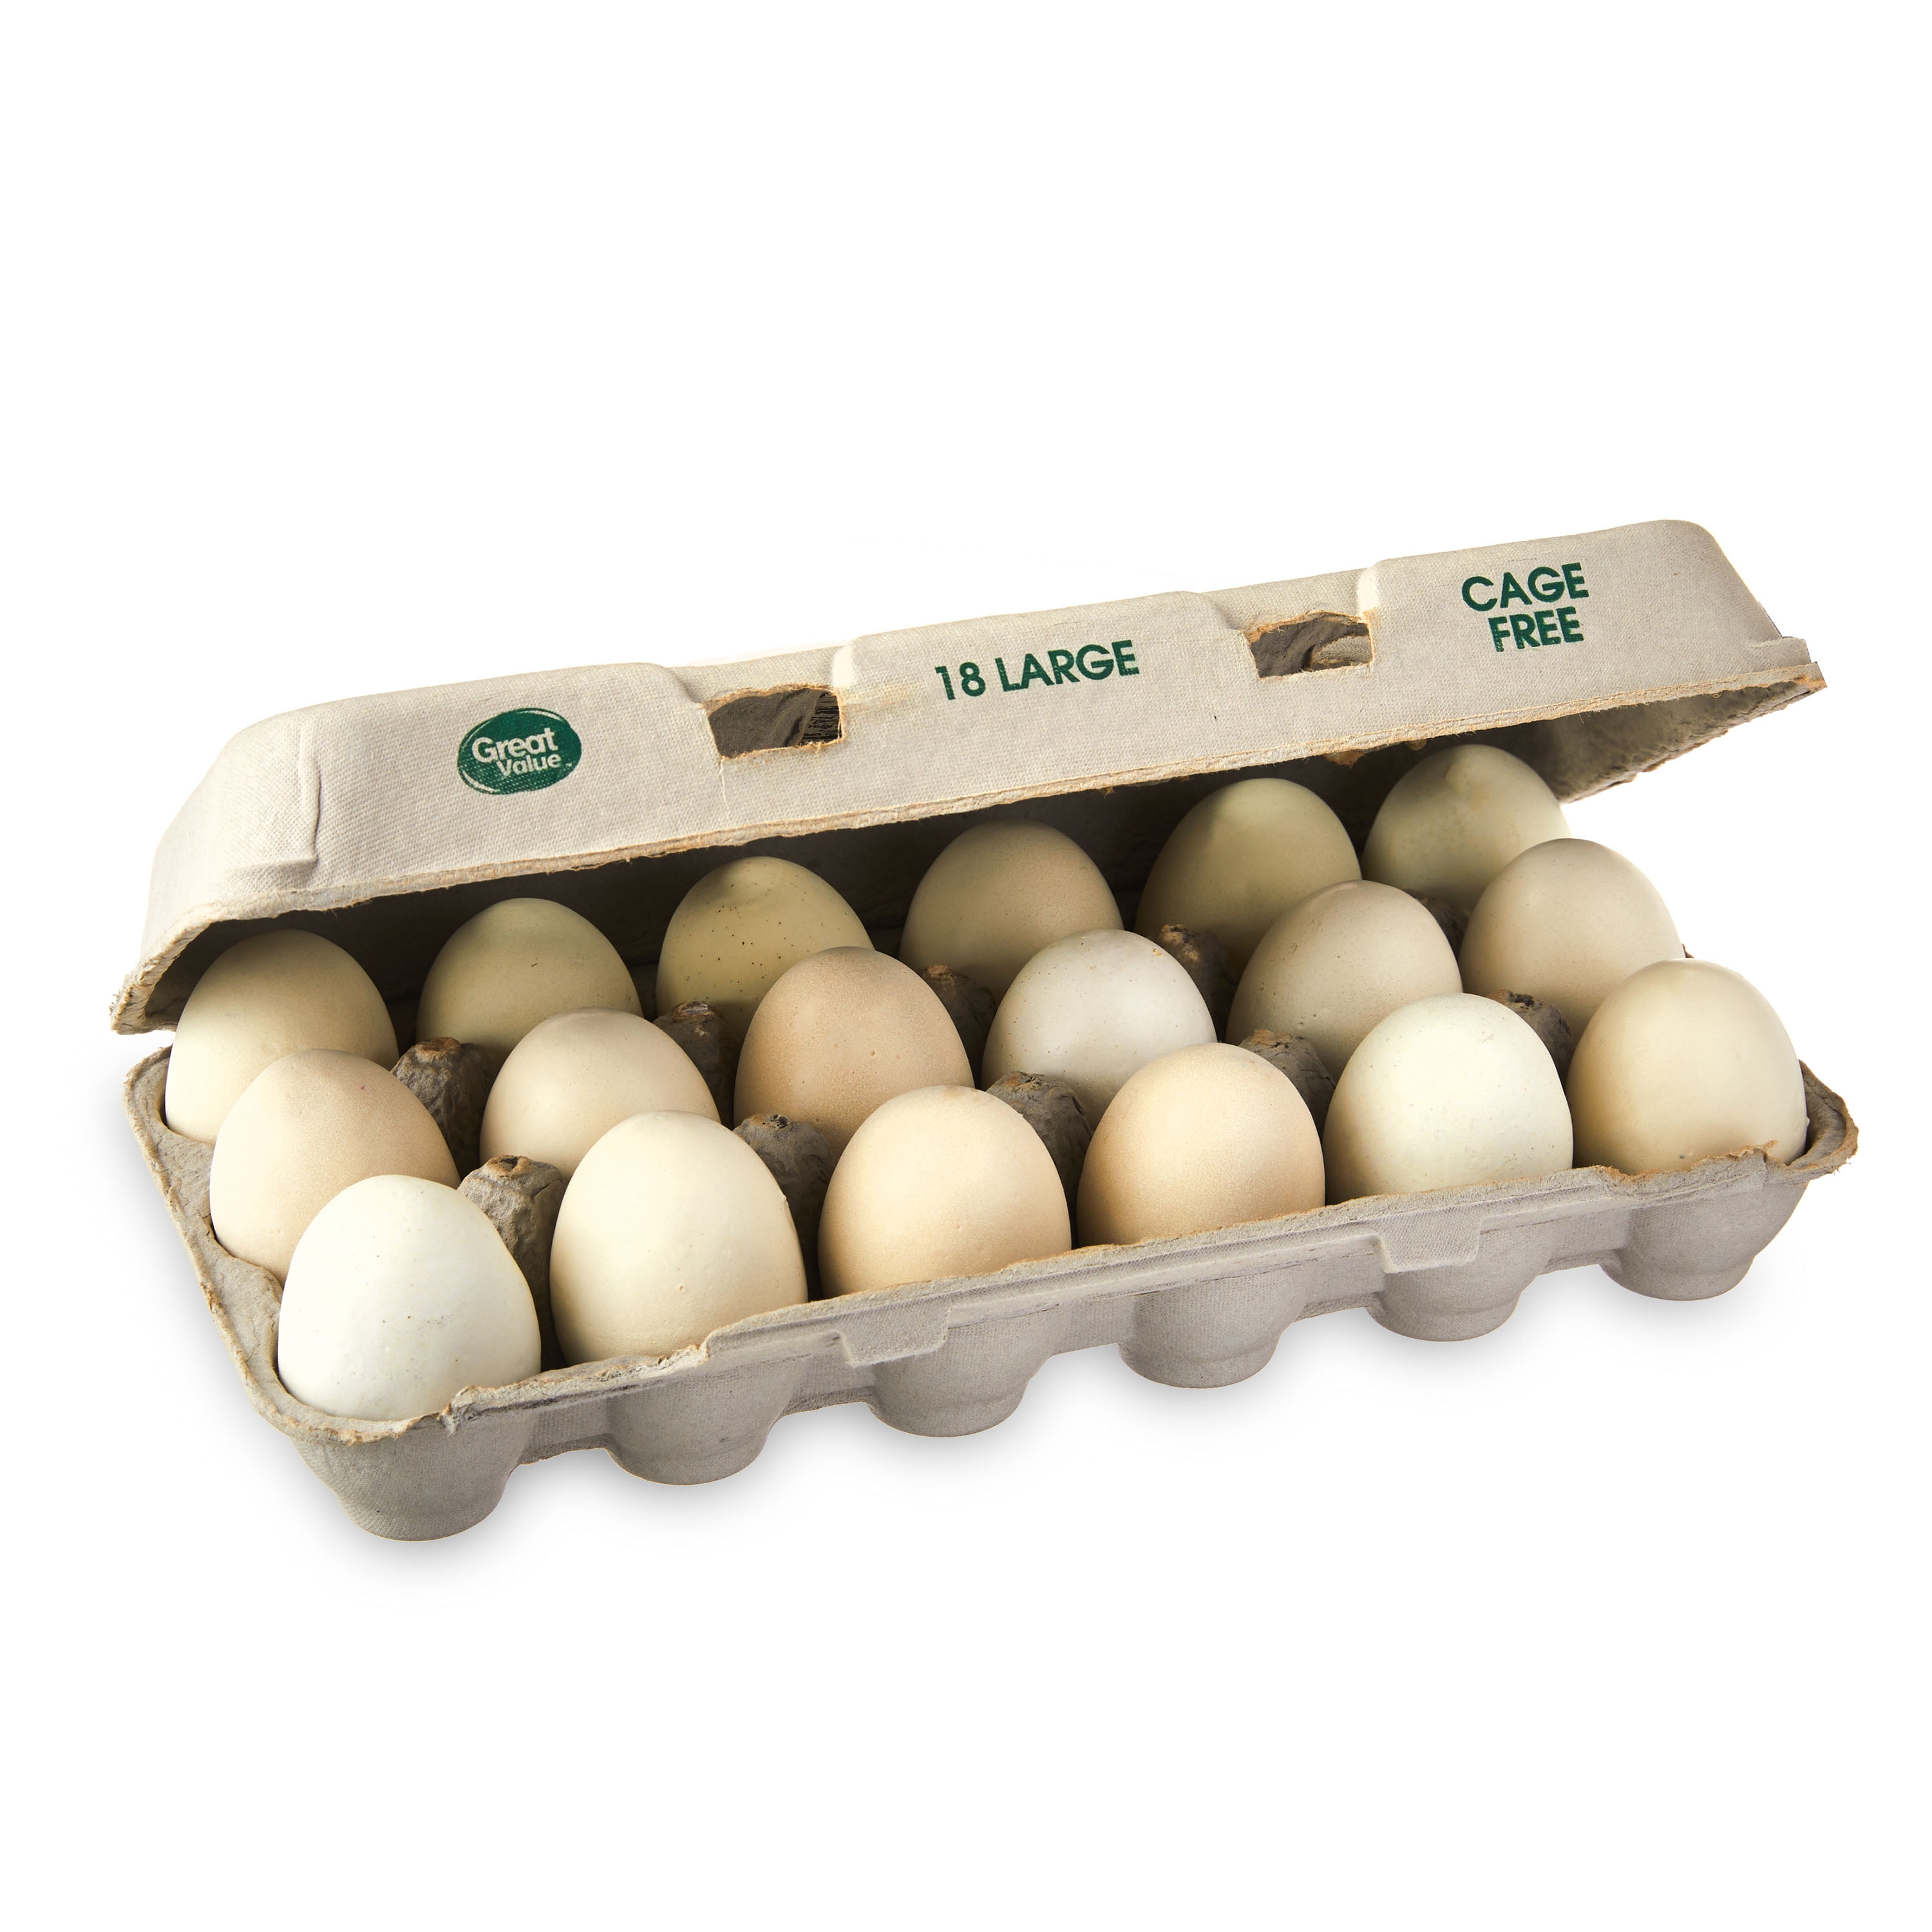 Aislante fecha límite Broma Great Value Cage Free Large AA White Eggs, 18 Count - Walmart.com